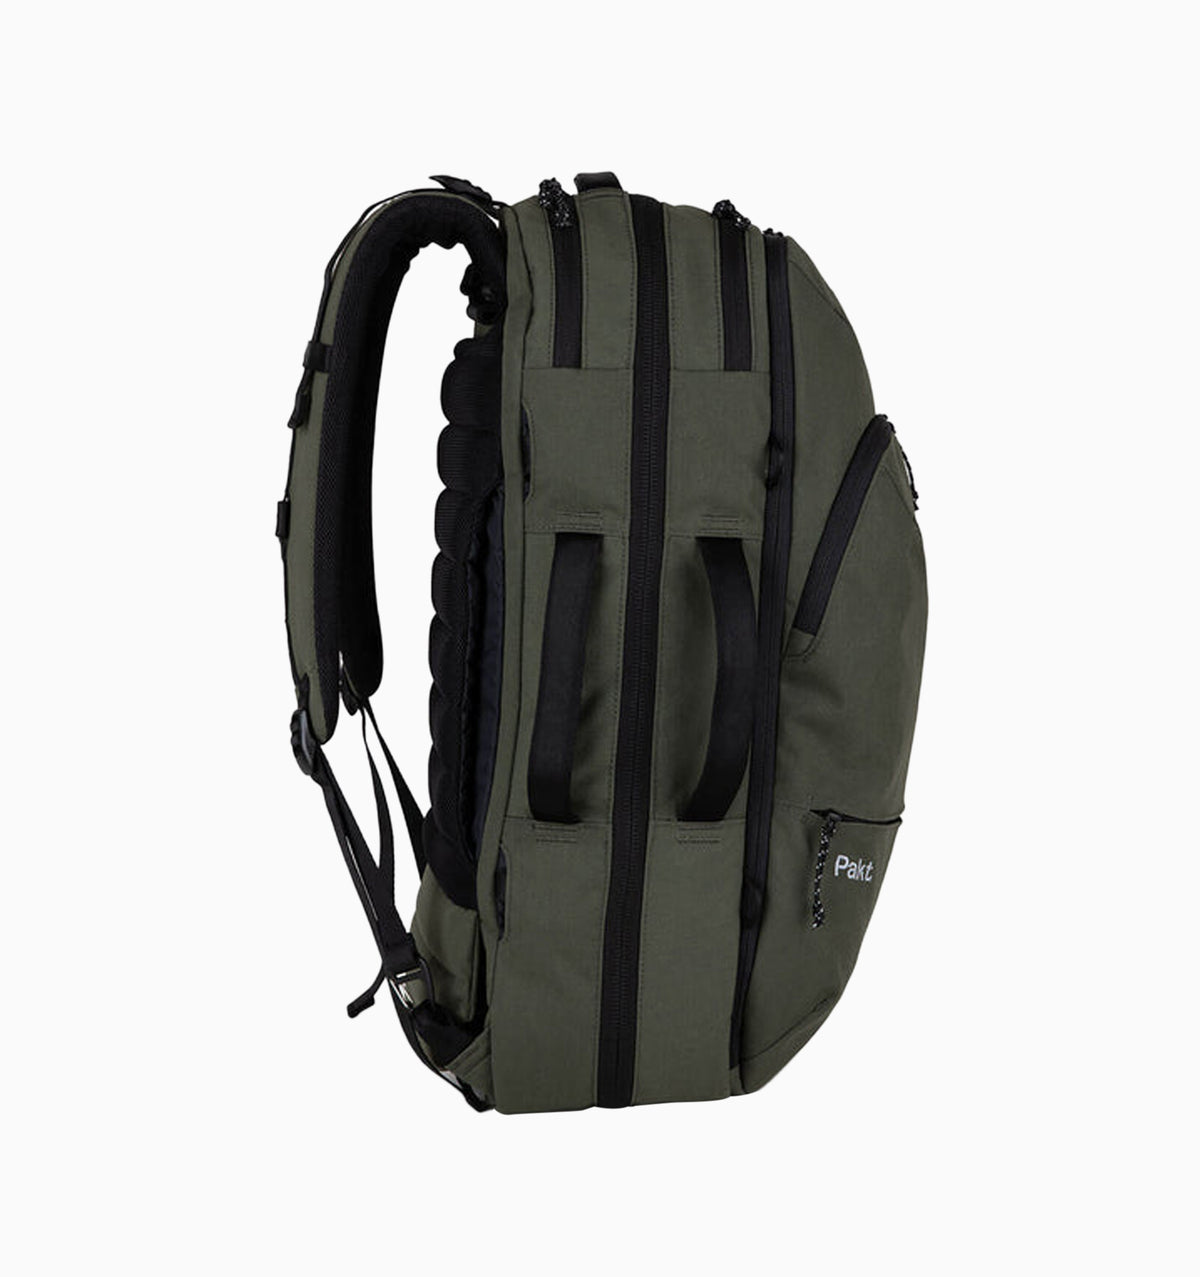 Pakt 16" Travel Backpack V2 35L - Forest